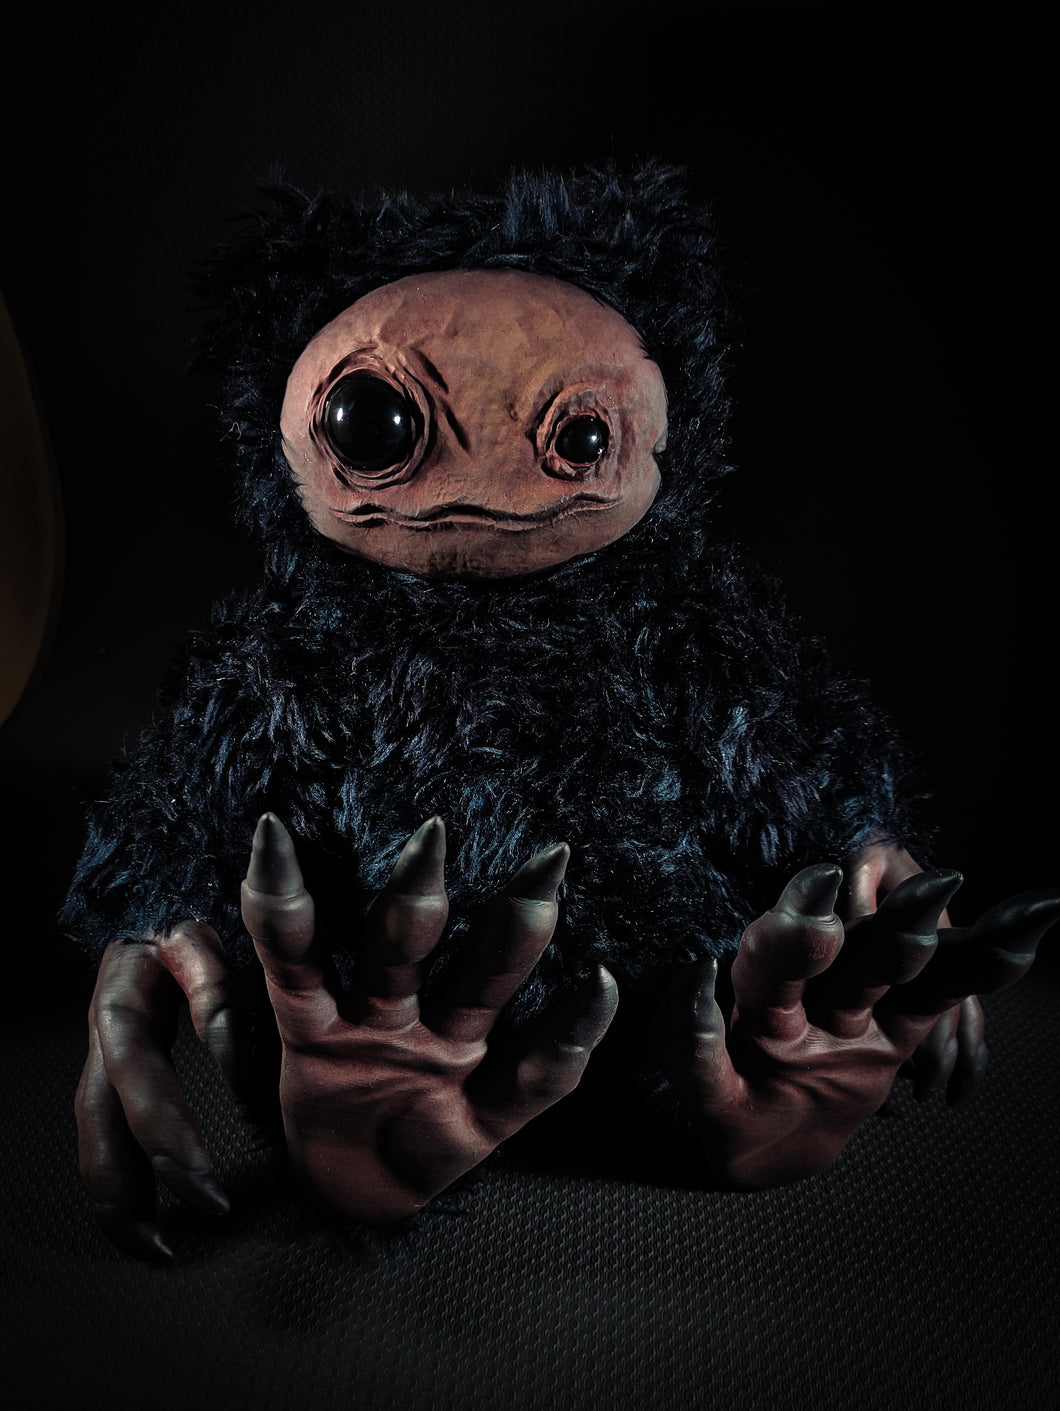 ZIPPO: Midnight Ver. - Monster Art Doll Plush Toy